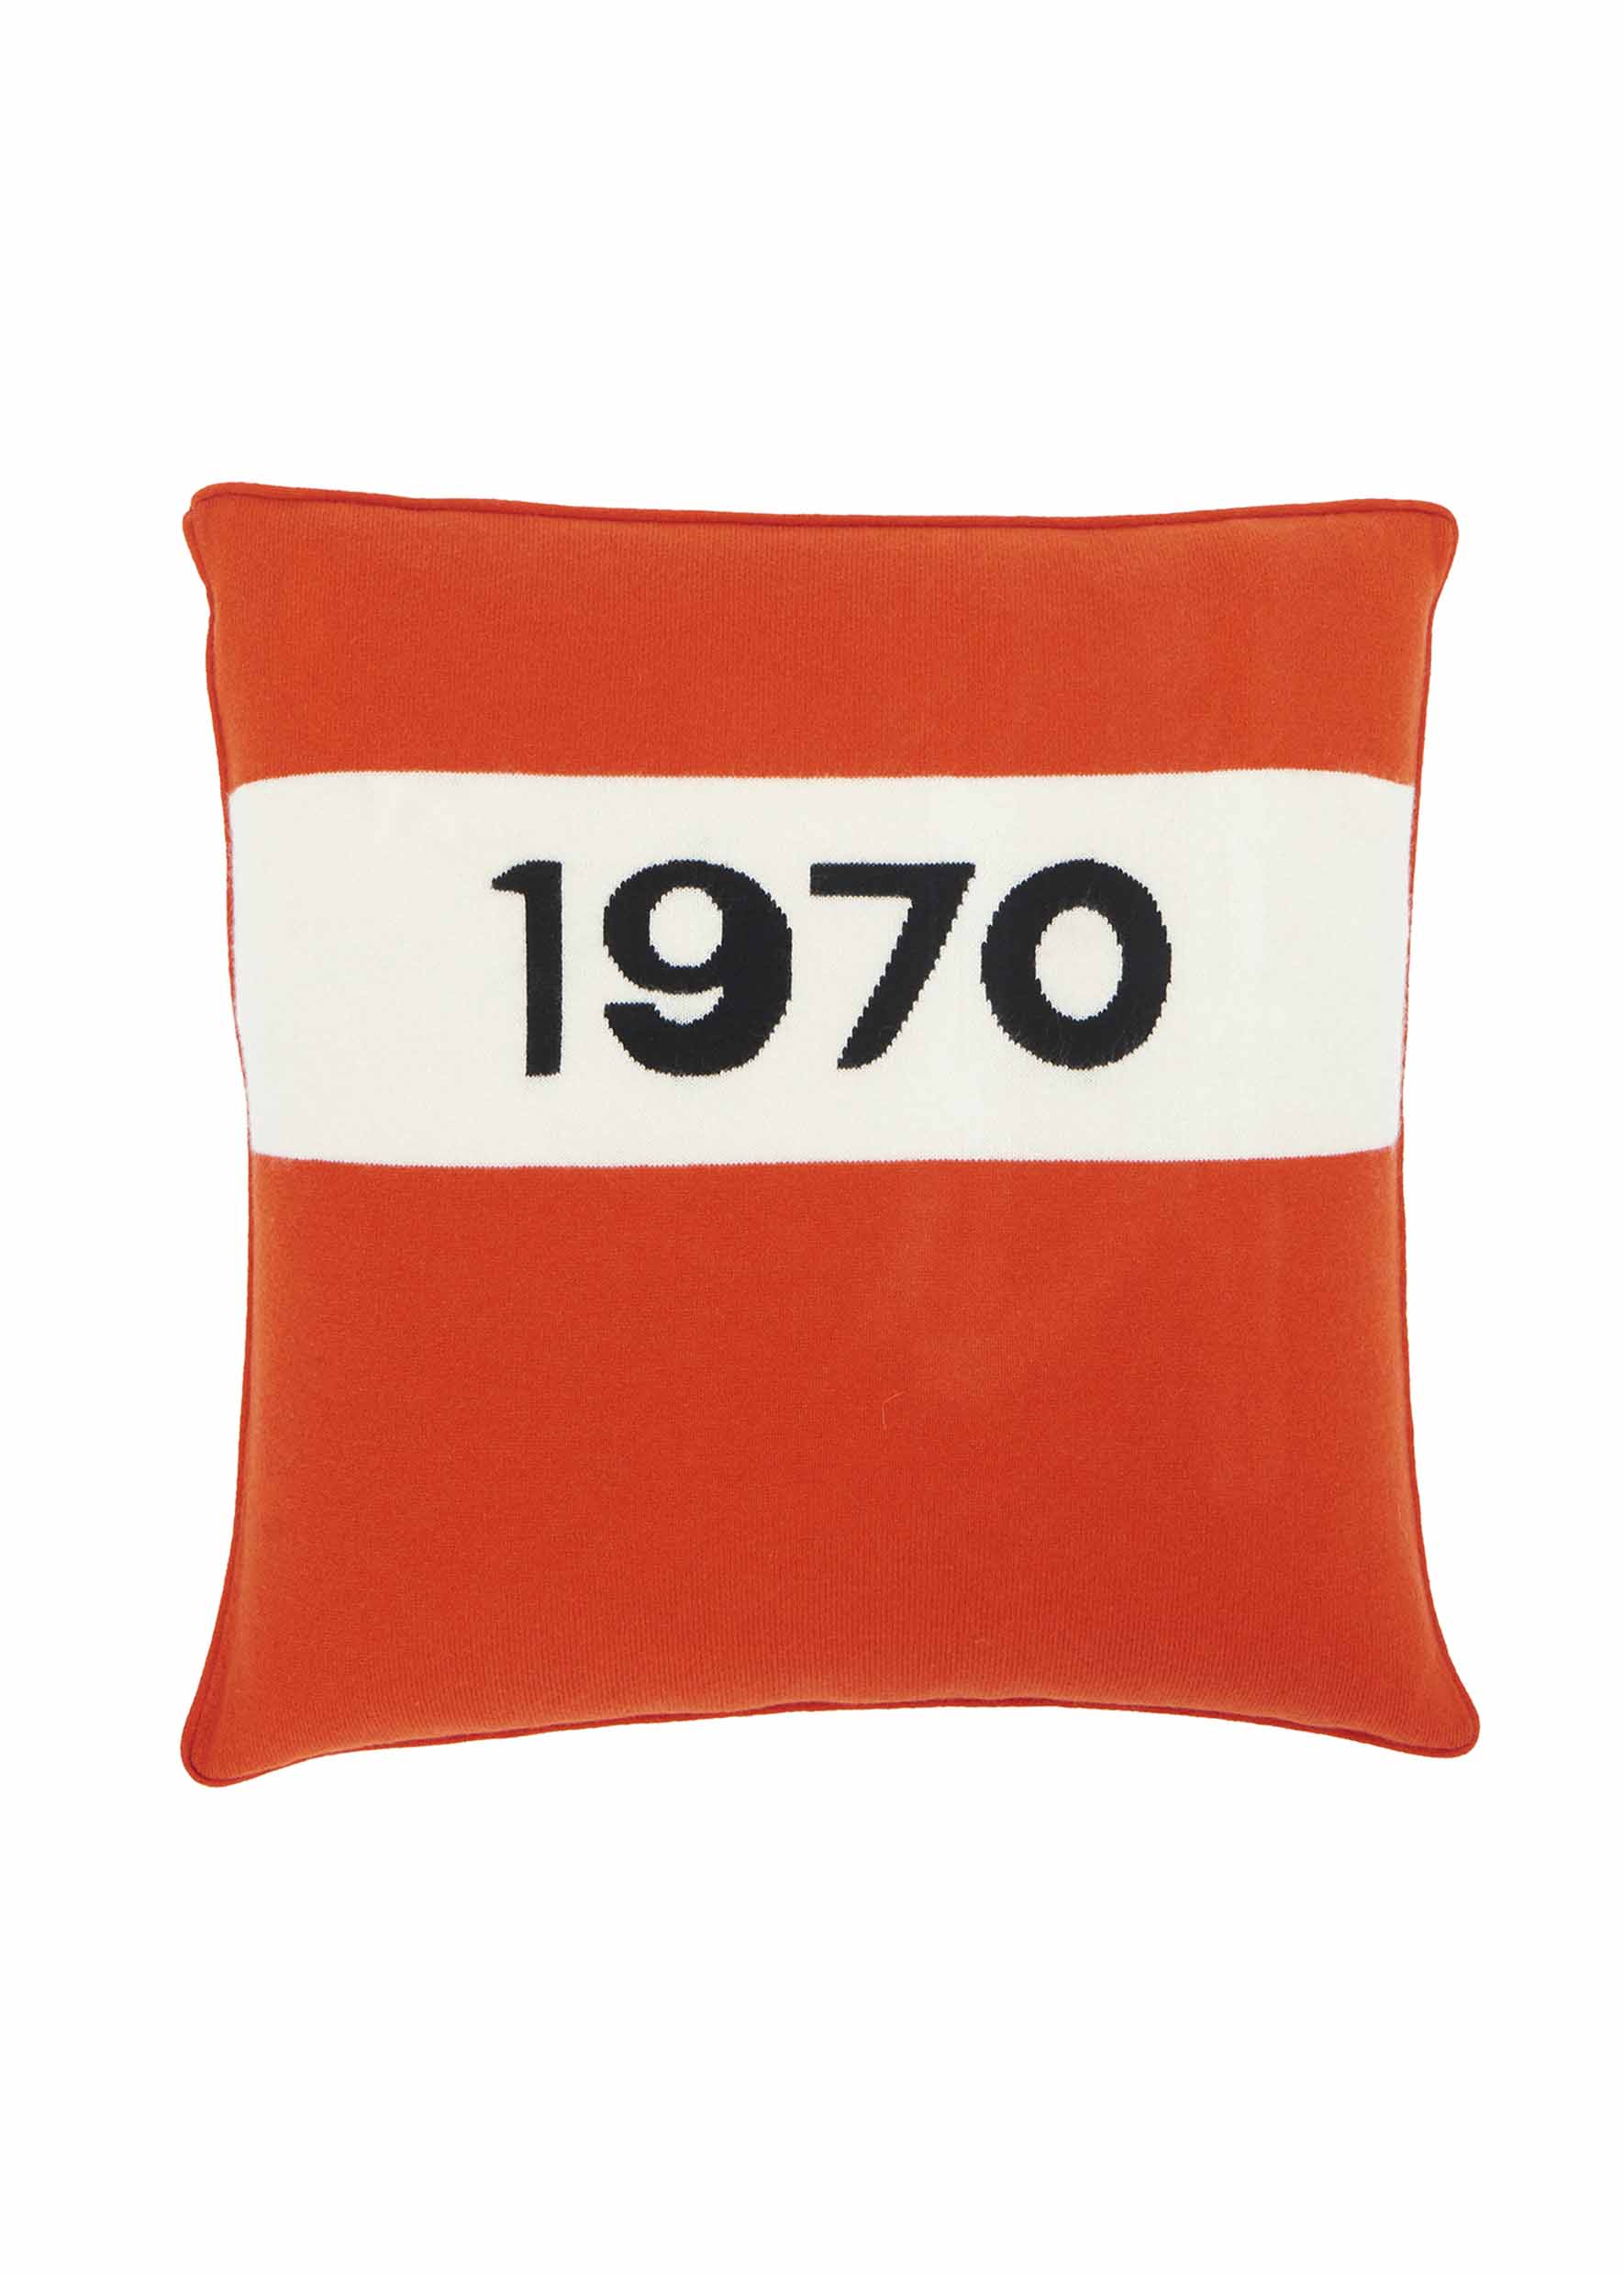 Bella Freud 1970 Cushion Cover - Red